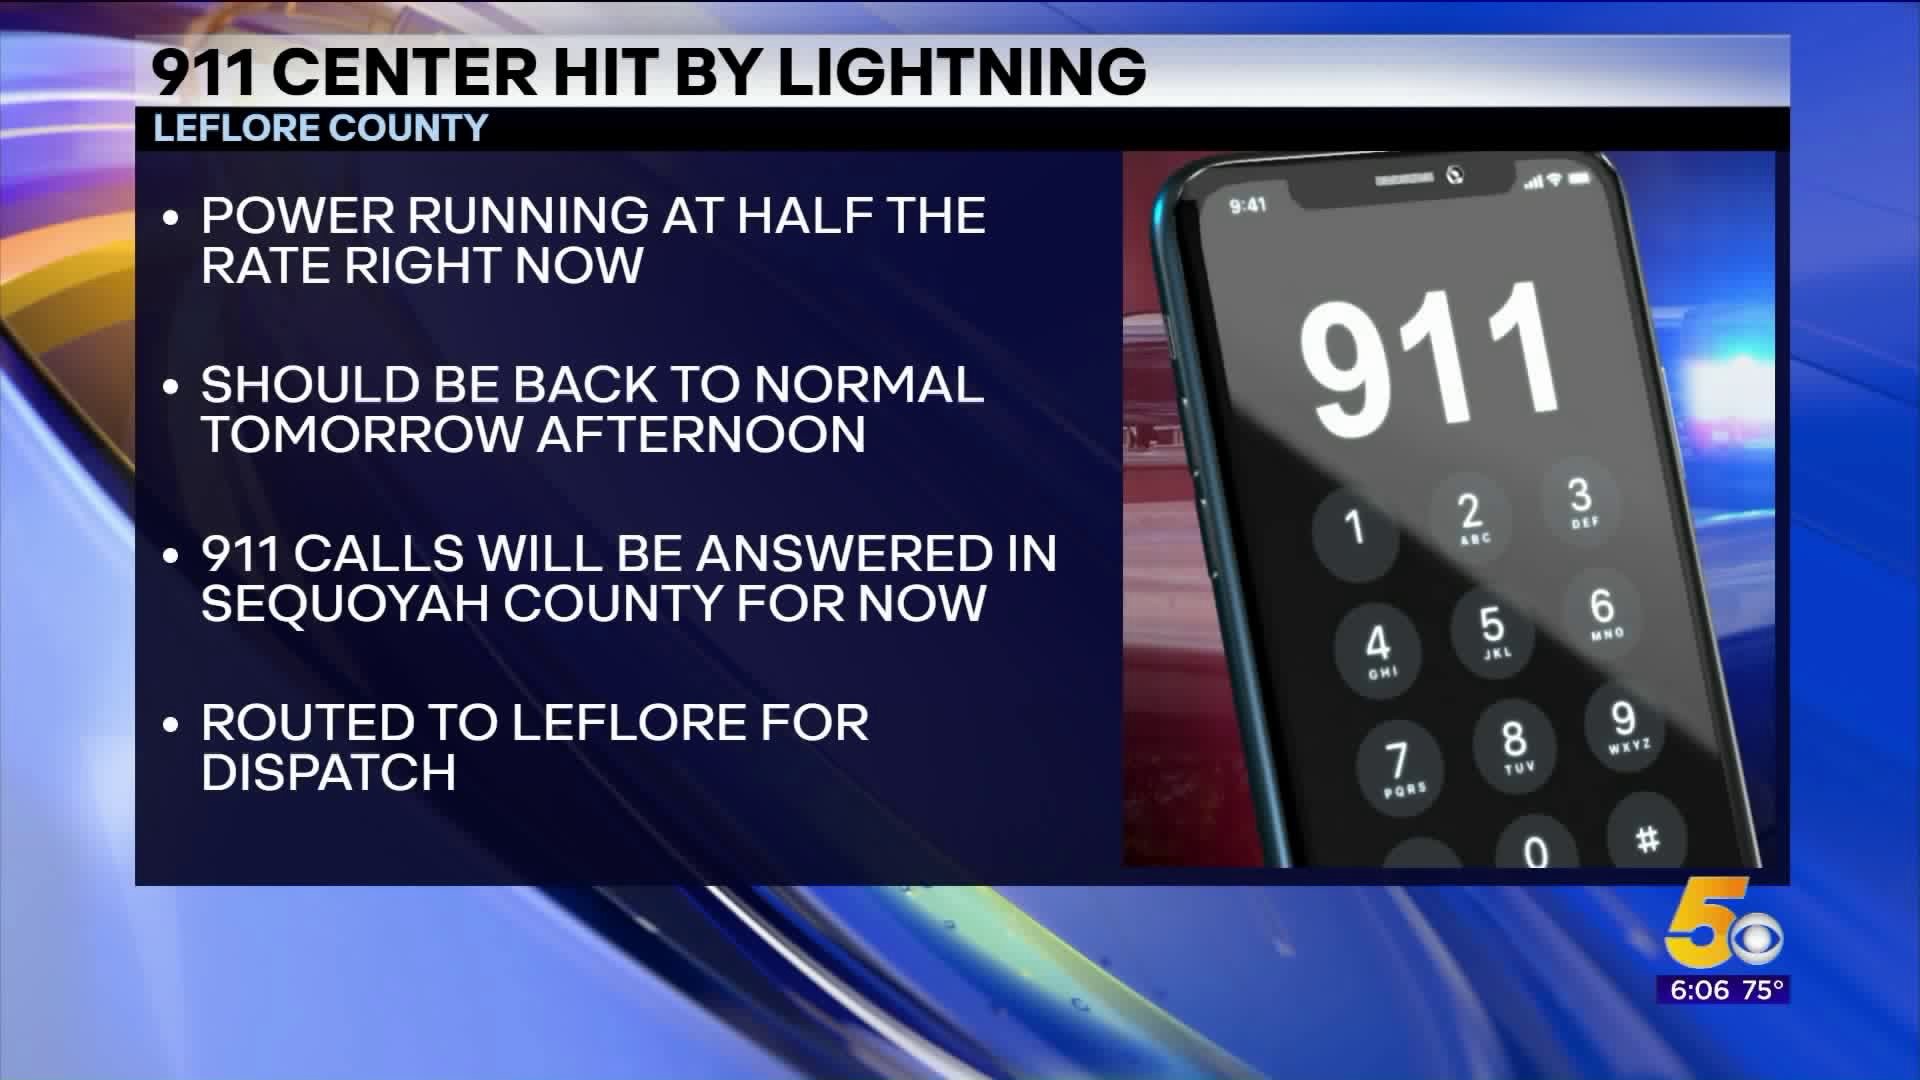 LeFlore County 911 Center Hit by Lightning